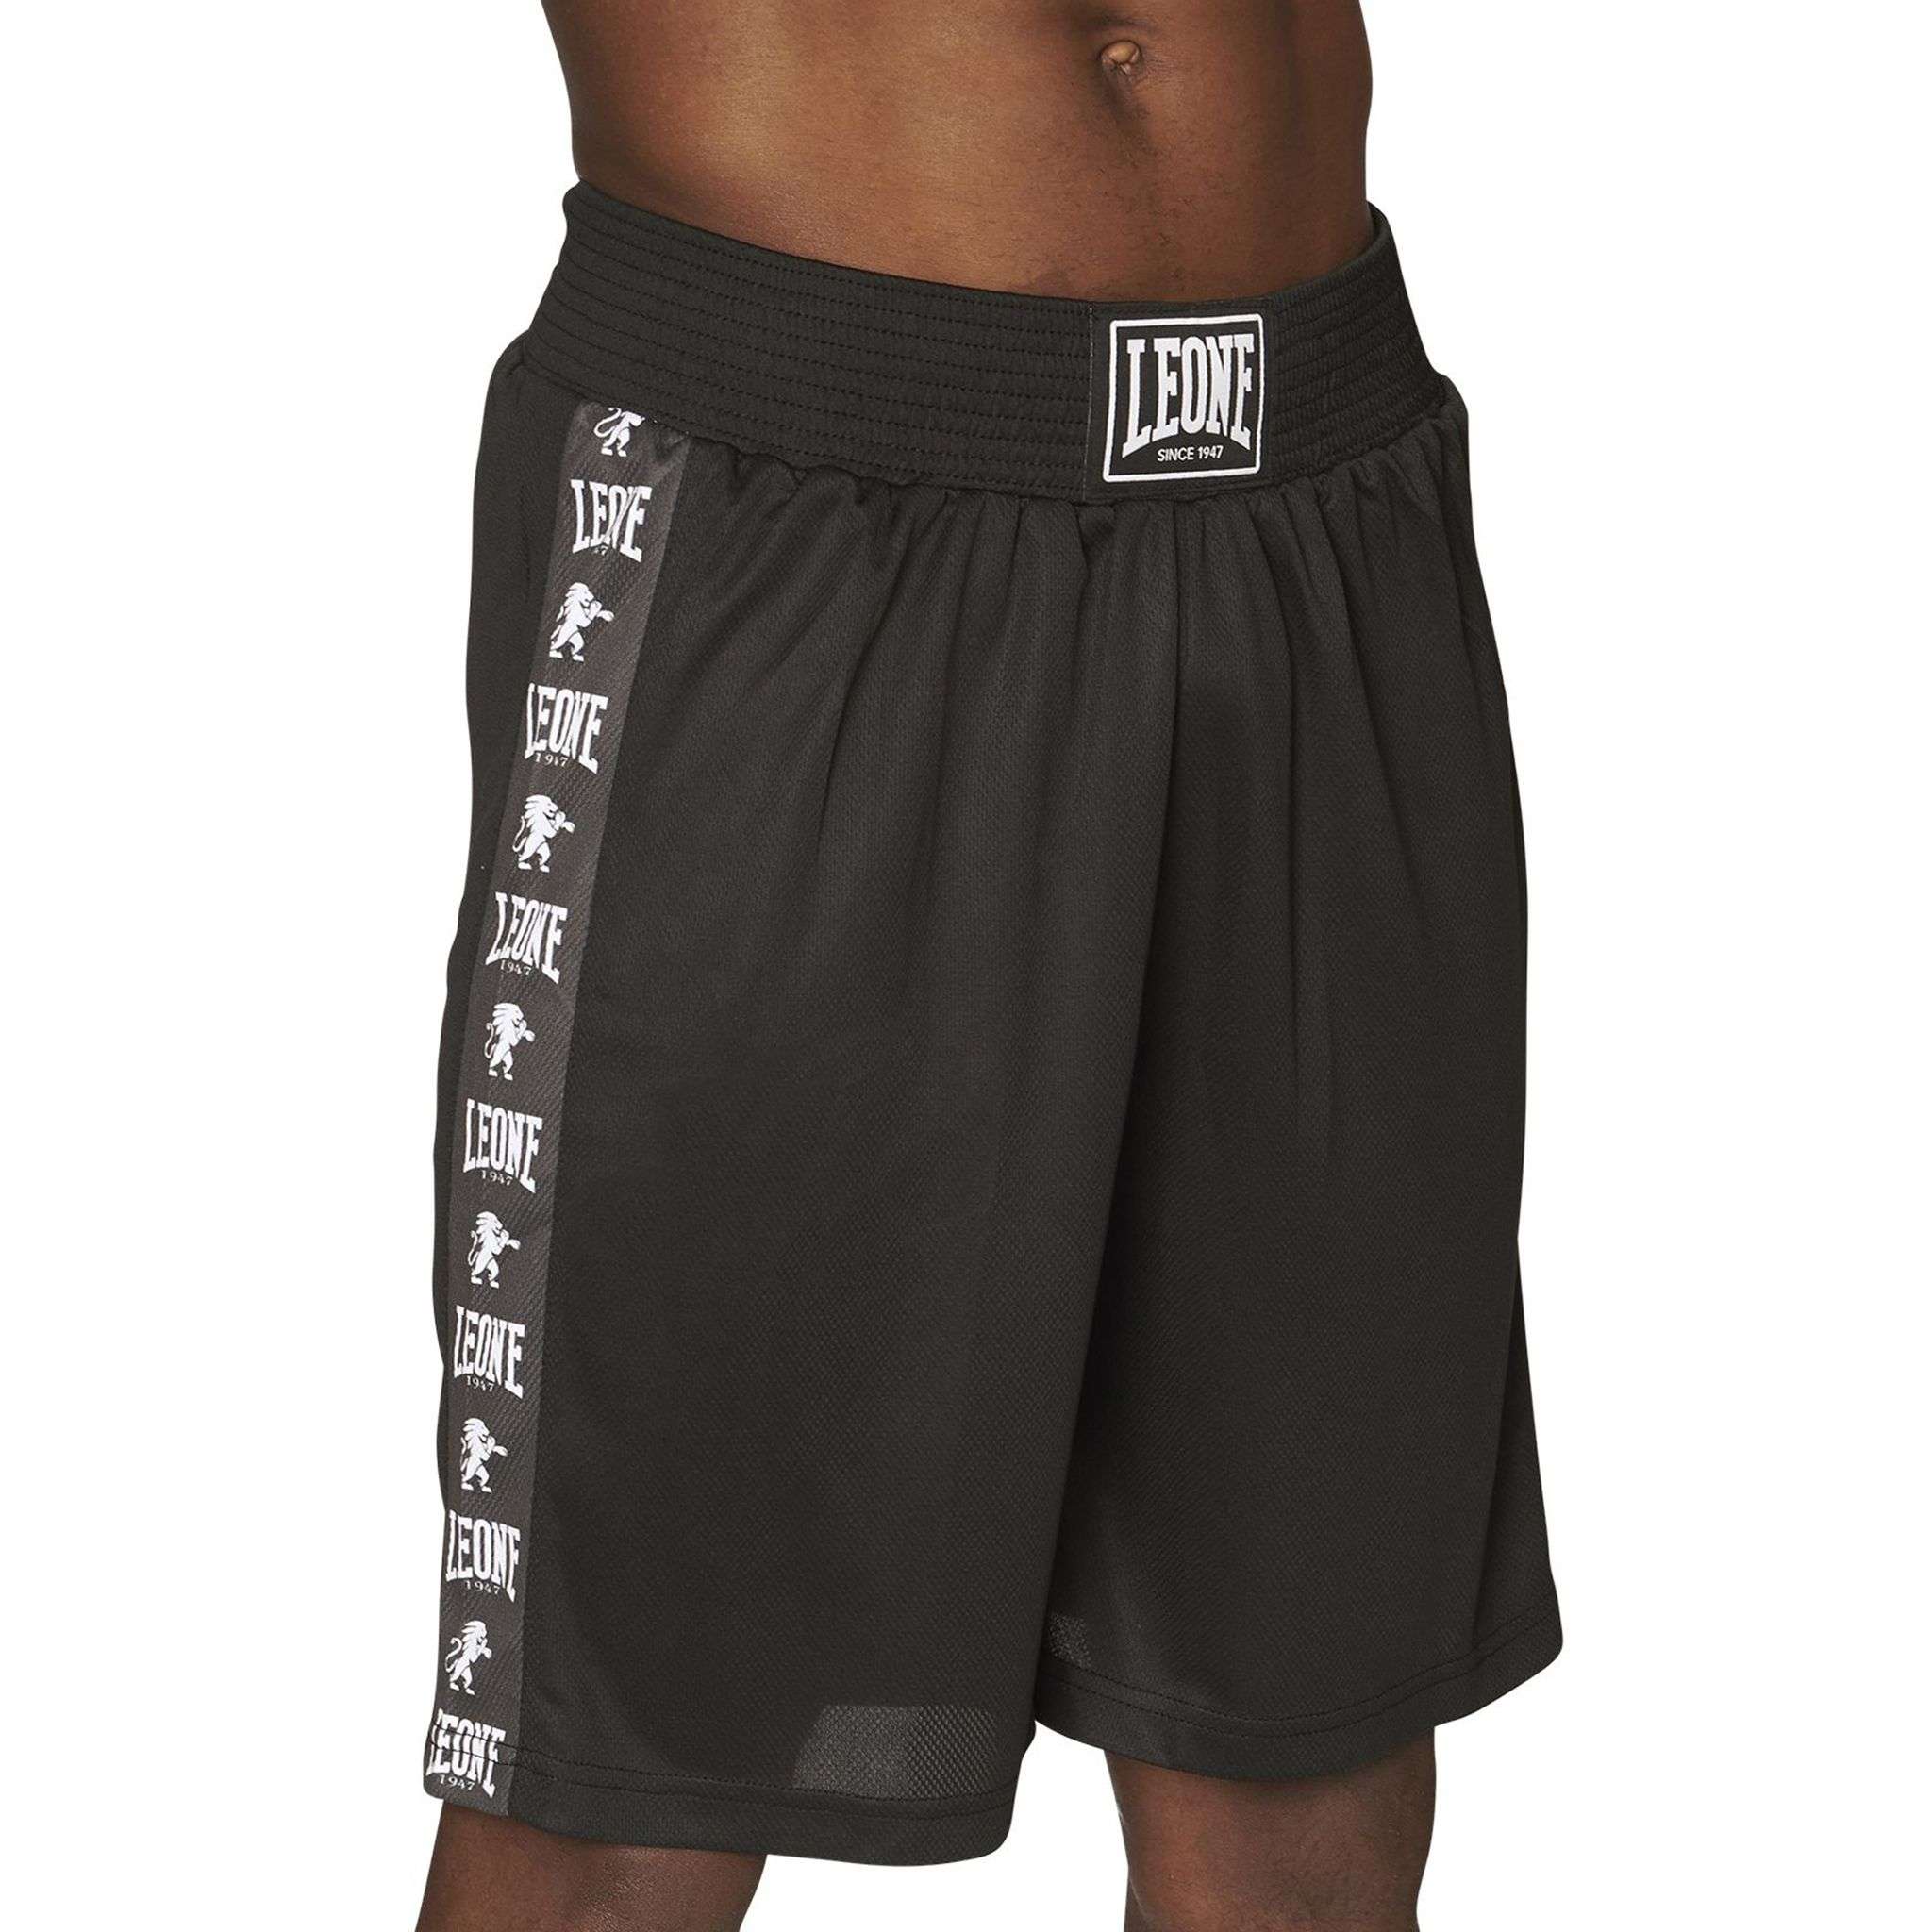 Pantalon Boxeo Ambassador - negro - 